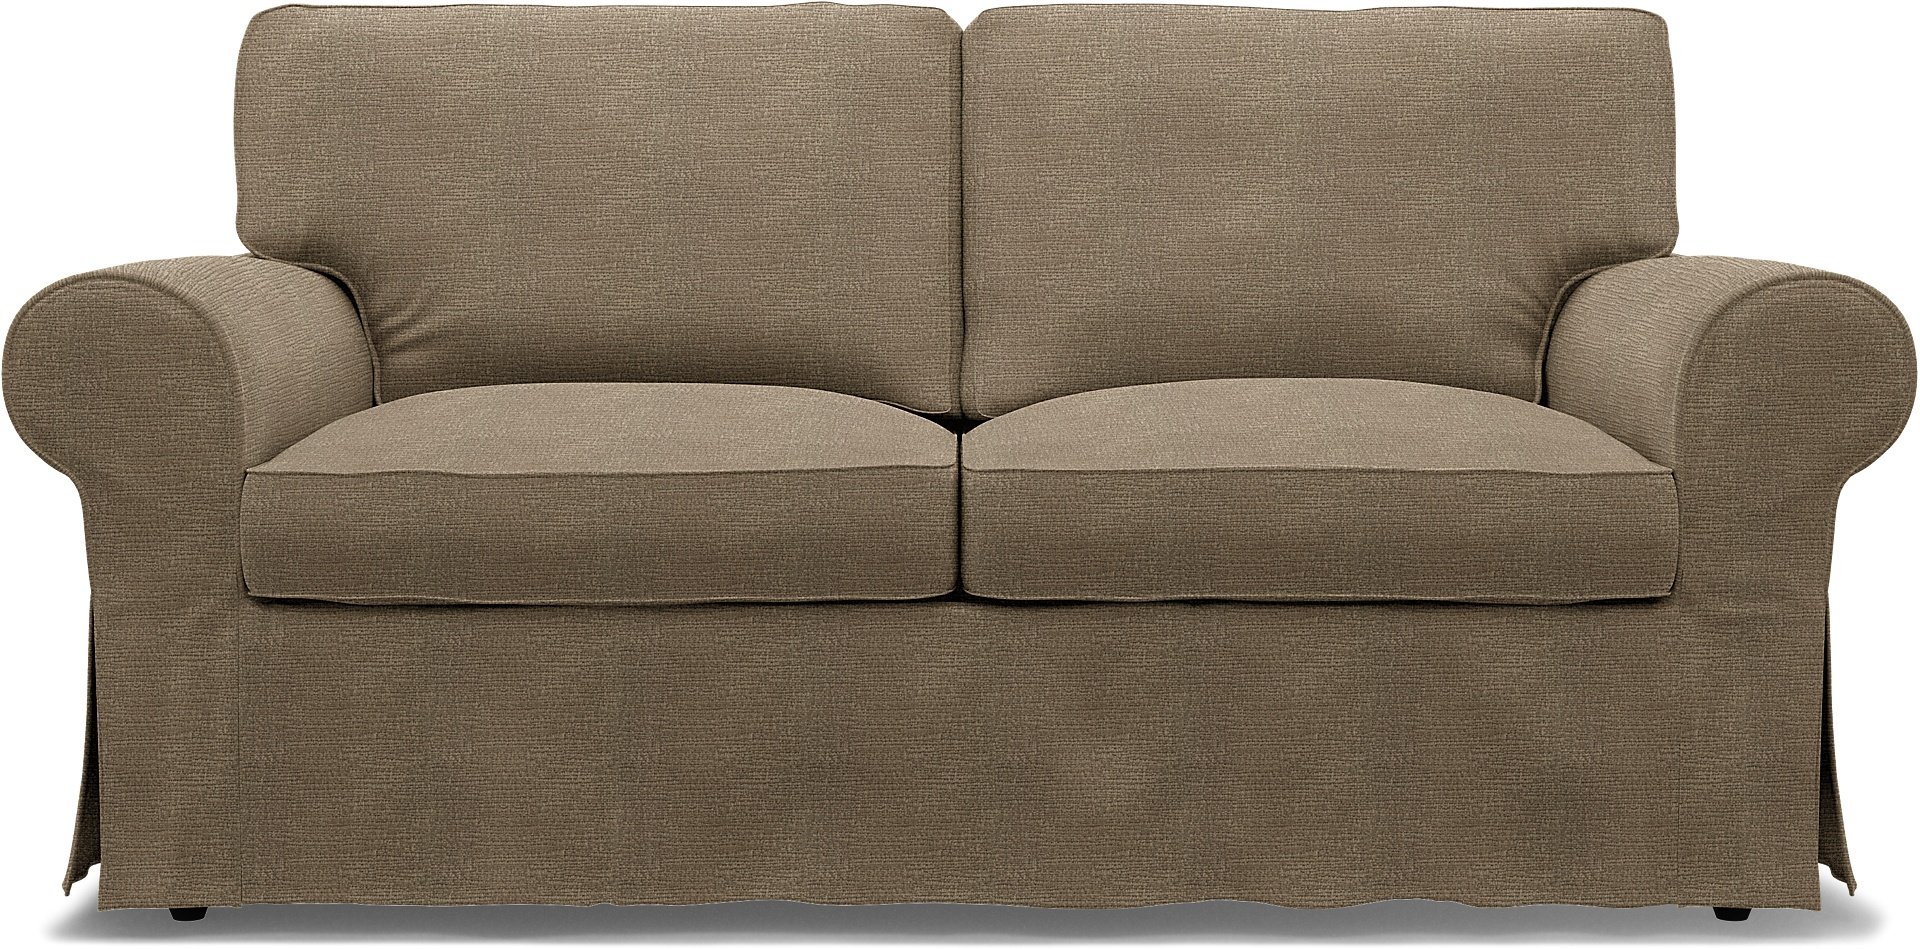 IKEA - Ektorp 2 Seater Sofa Bed Cover, Camel, Boucle & Texture - Bemz